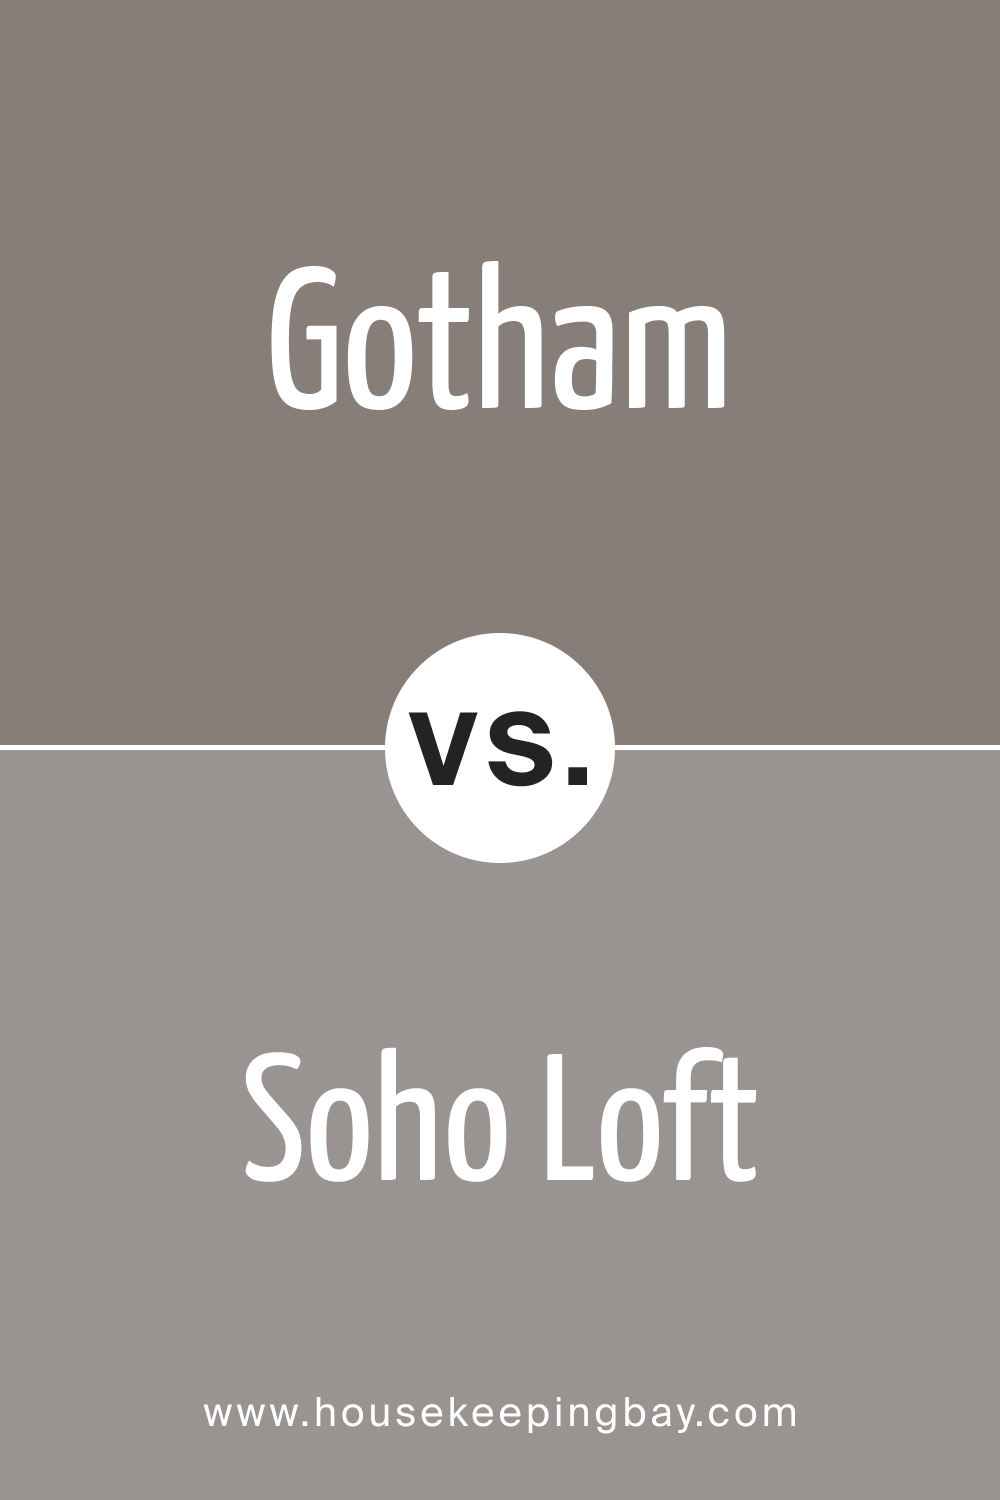 Gotham CSP-385 vs. CSP-10 Soho Loft